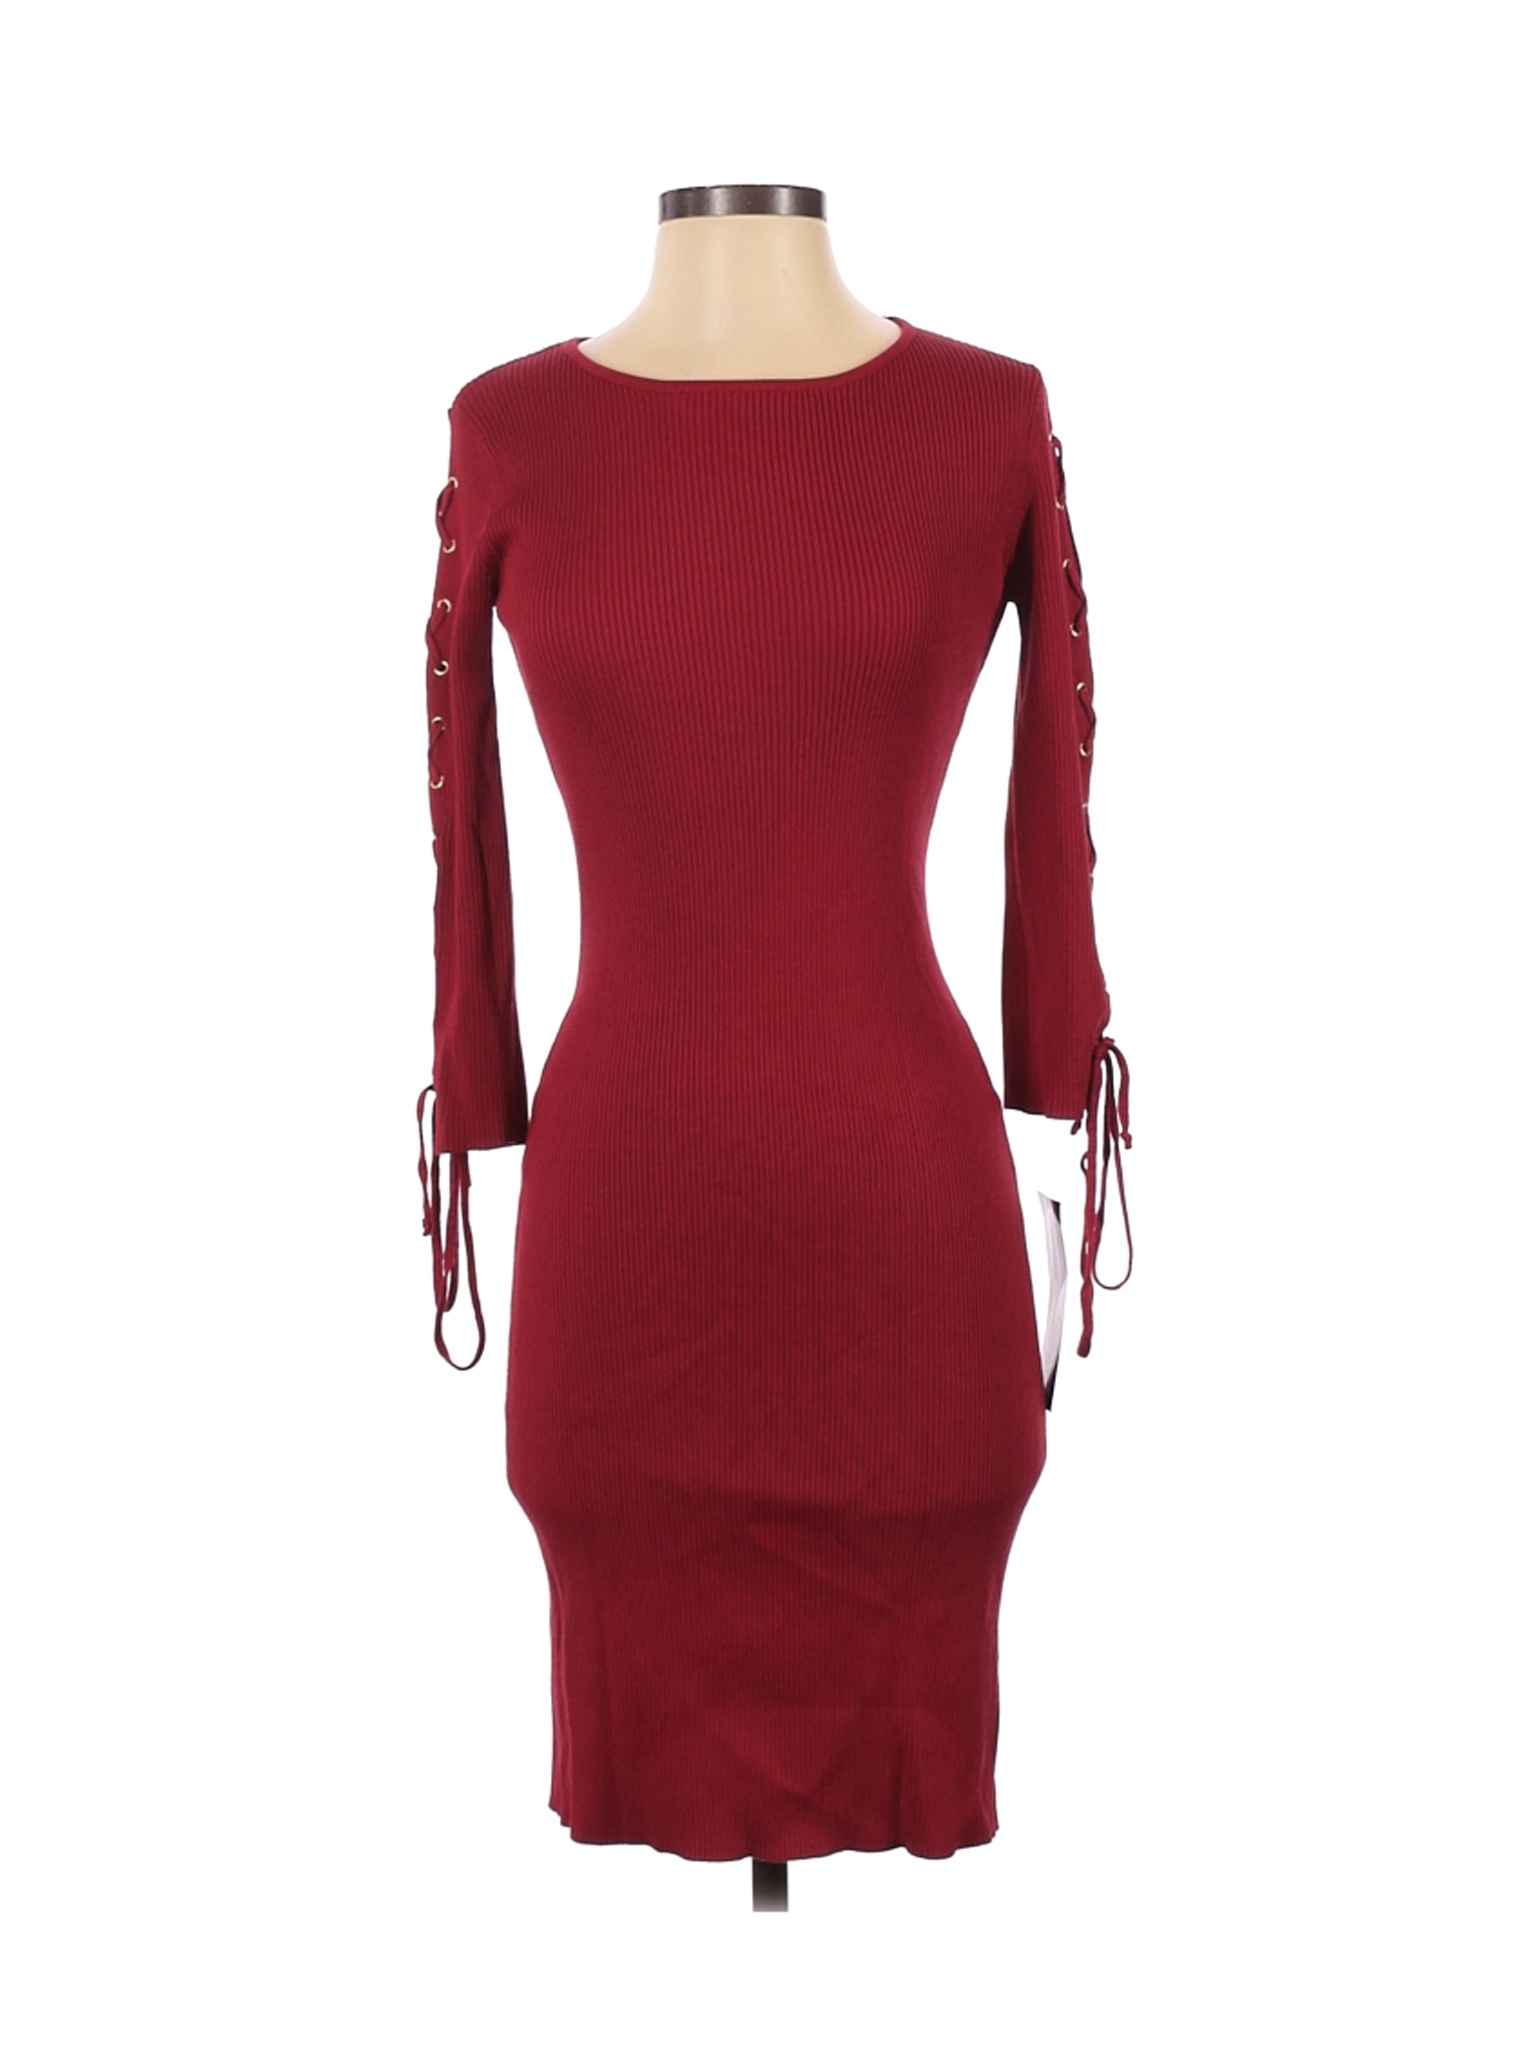 NWT Nina Leonard Women Red Casual Dress S | eBay